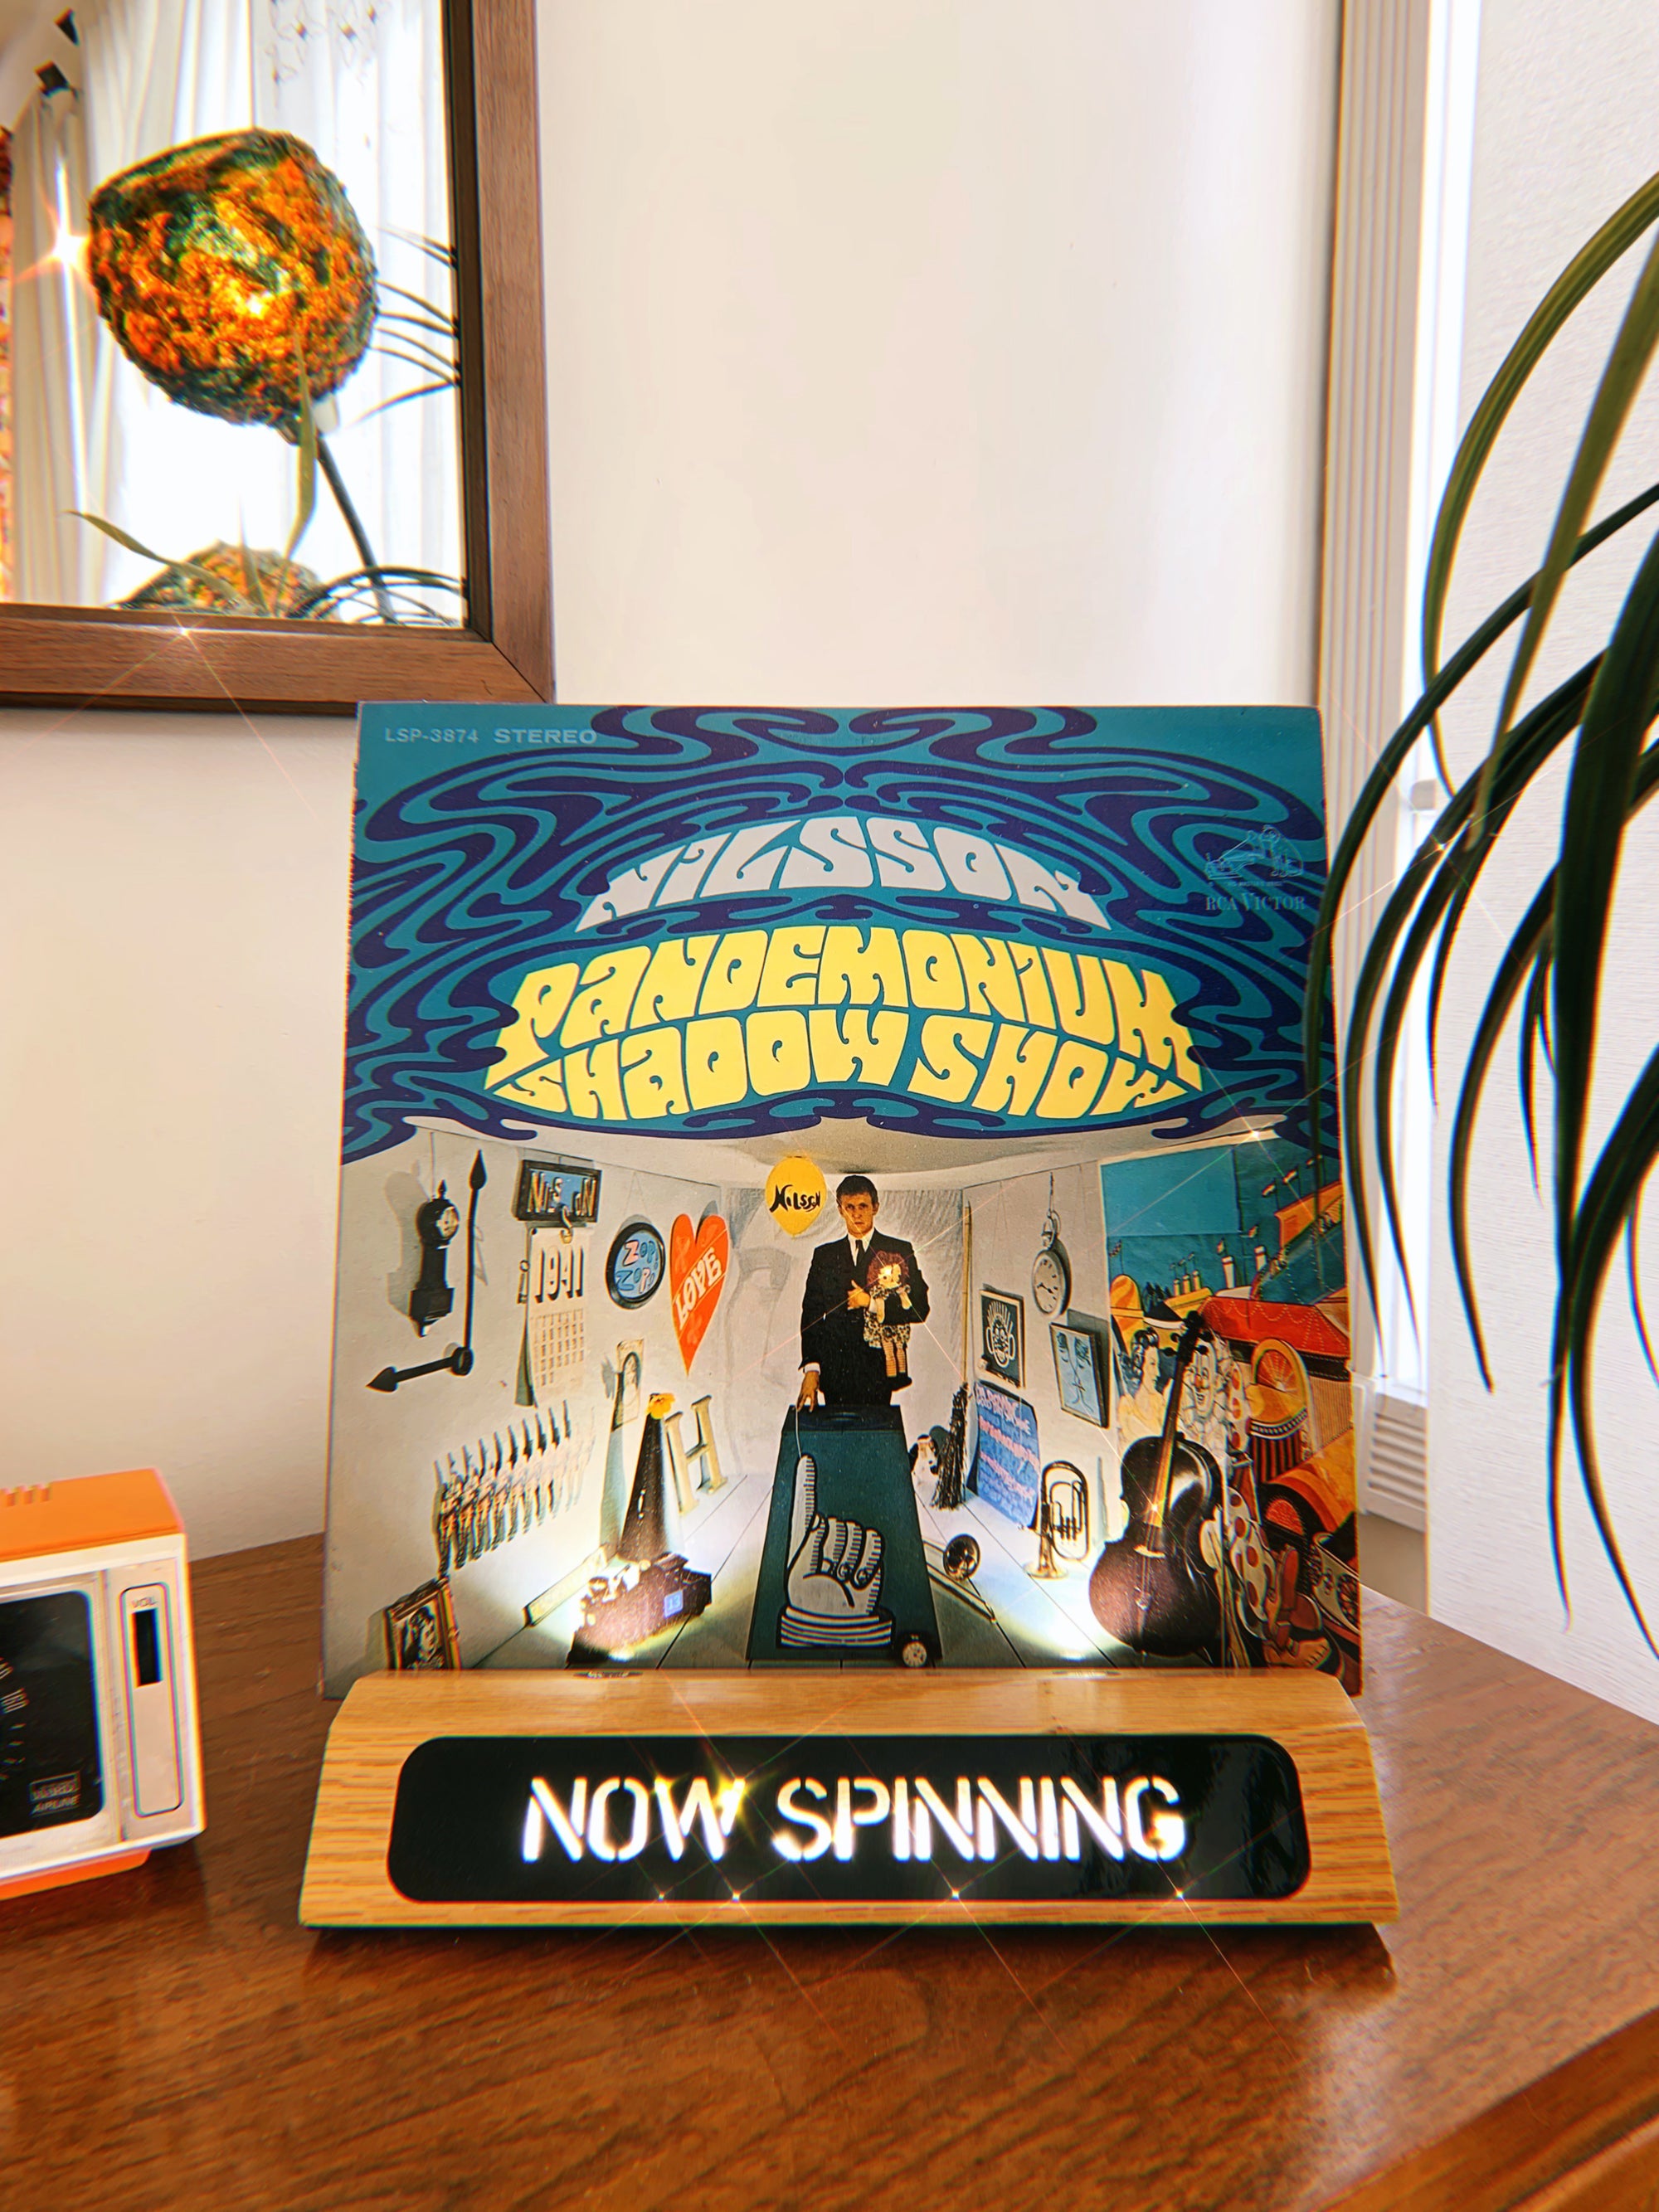 Vinyl-a-Day #4: Nilsson - Pandemonium Shadow Show (RCA, 1967)